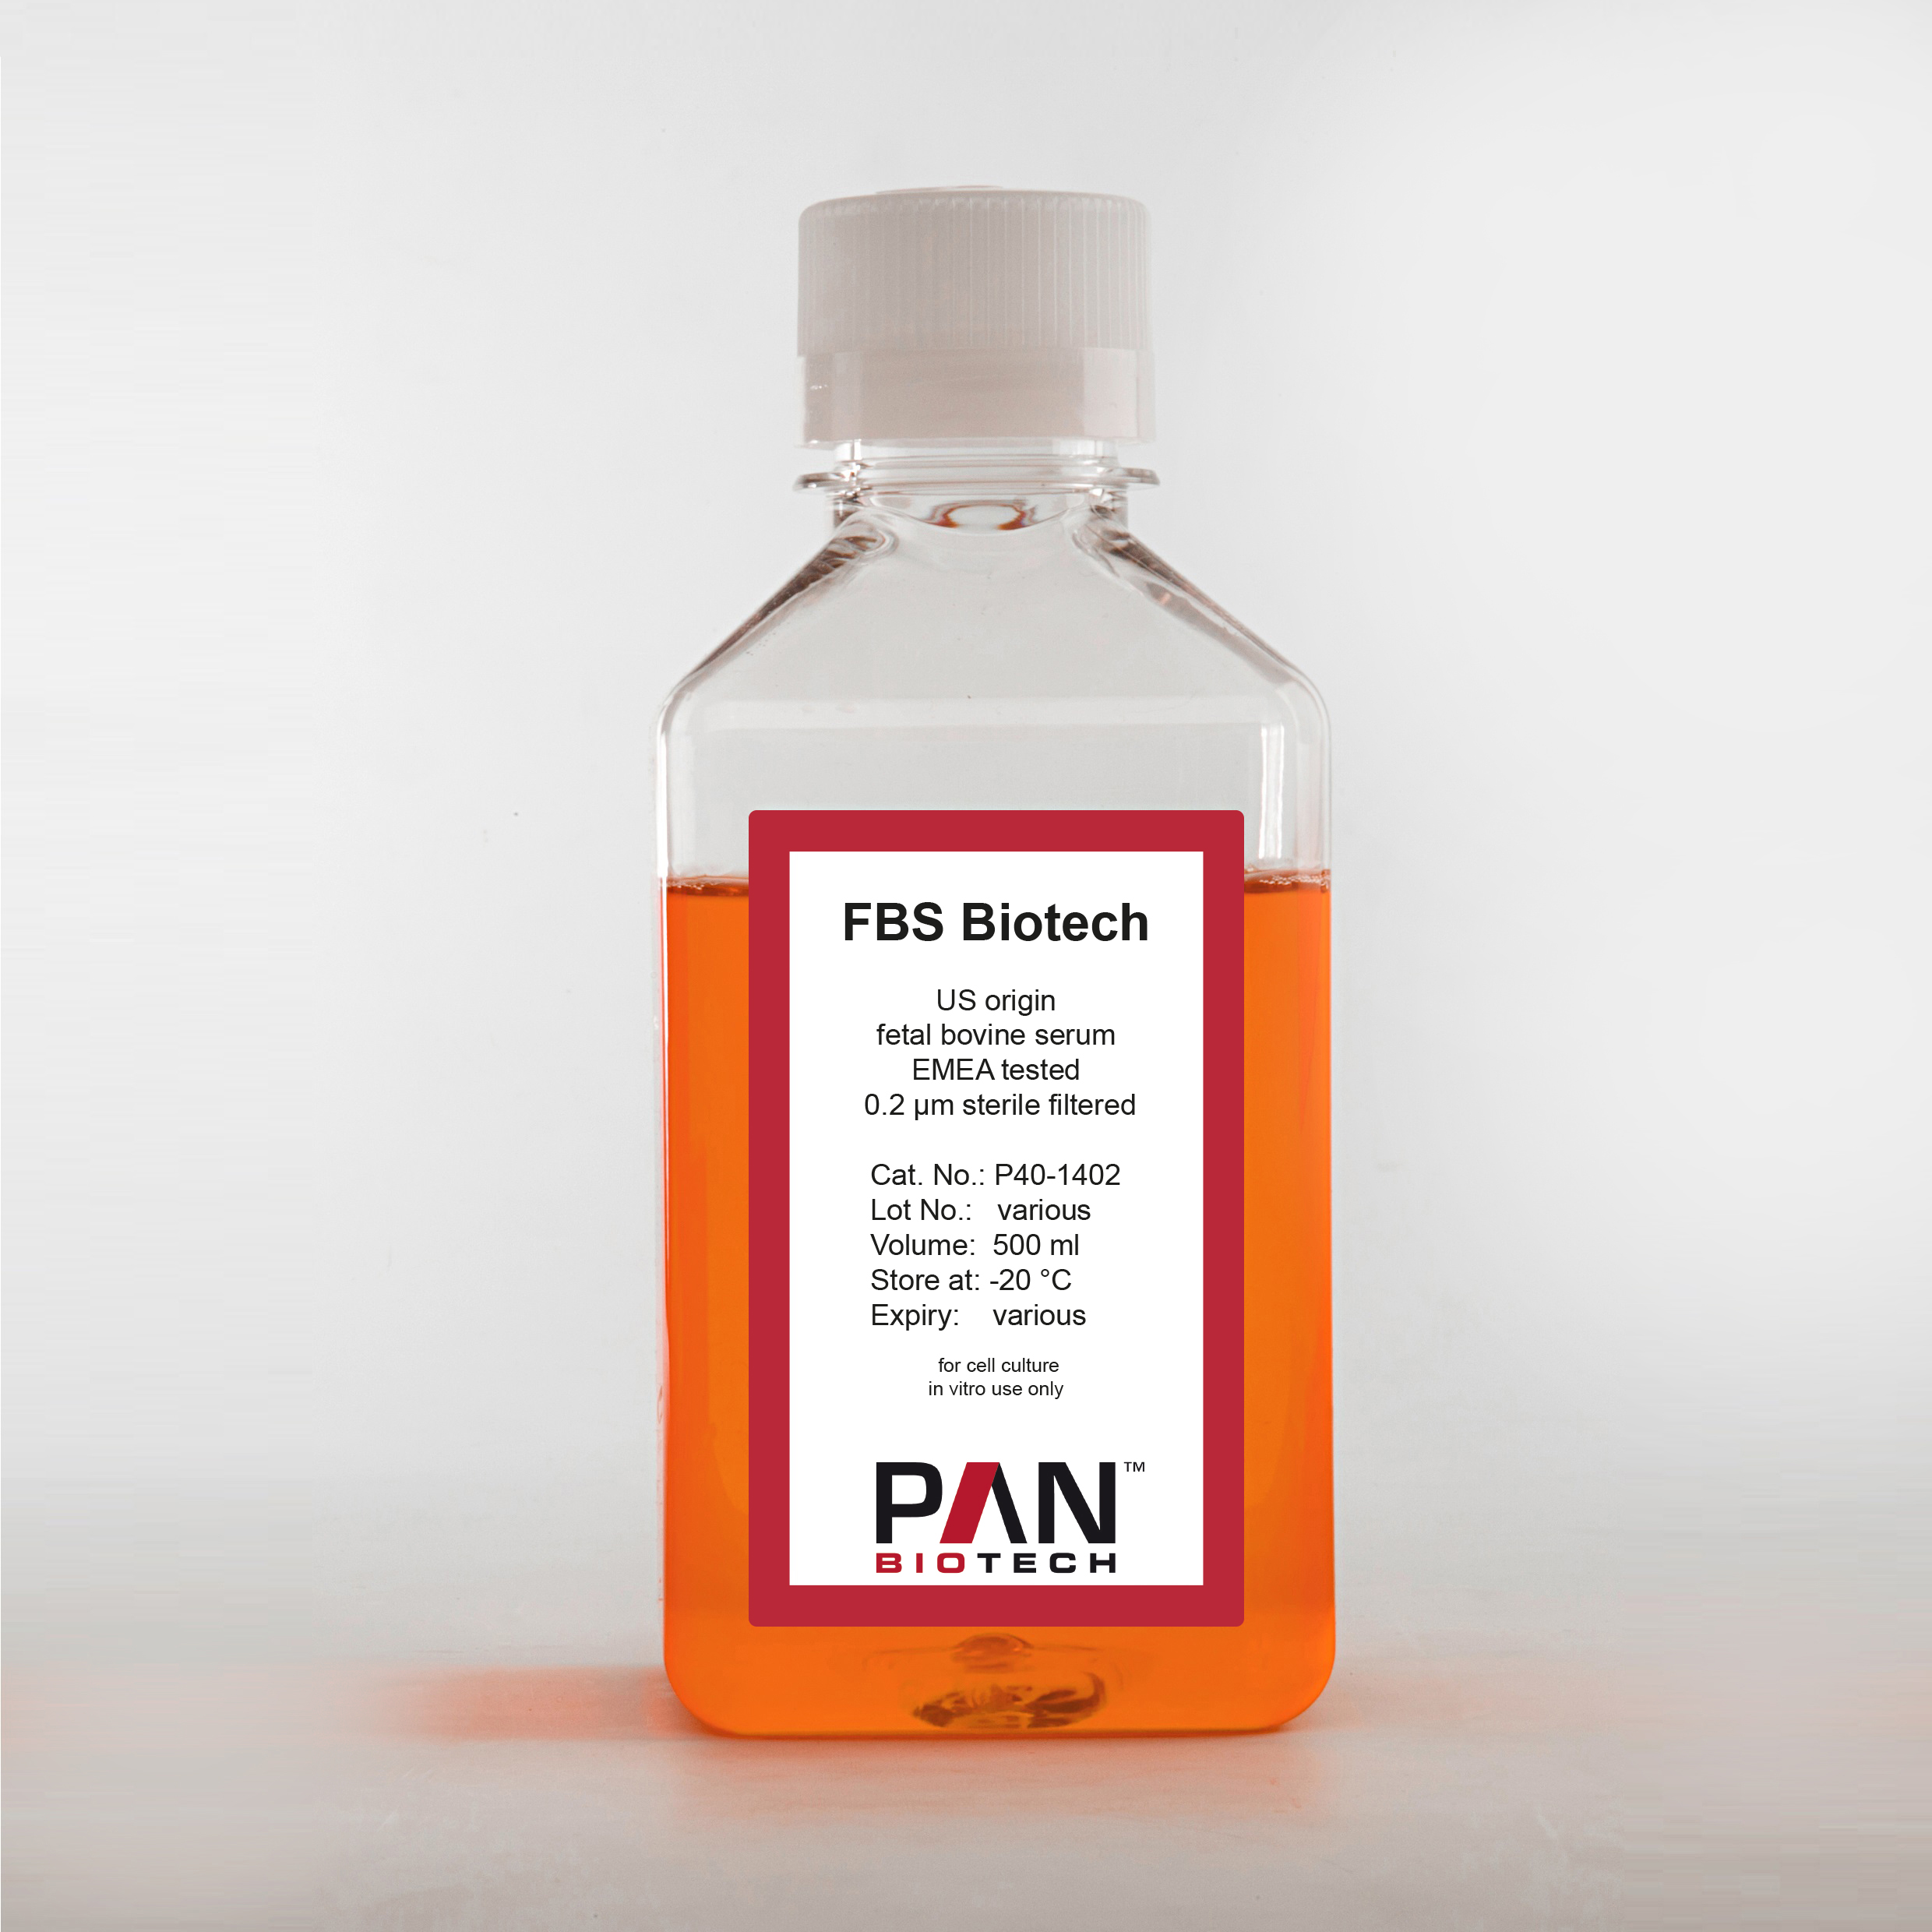 FBS Biotech, US origin, fetal bovine serum, tested according EMEA 1793 and Ph. Eur. 2262, 0.2 µm sterile filtered